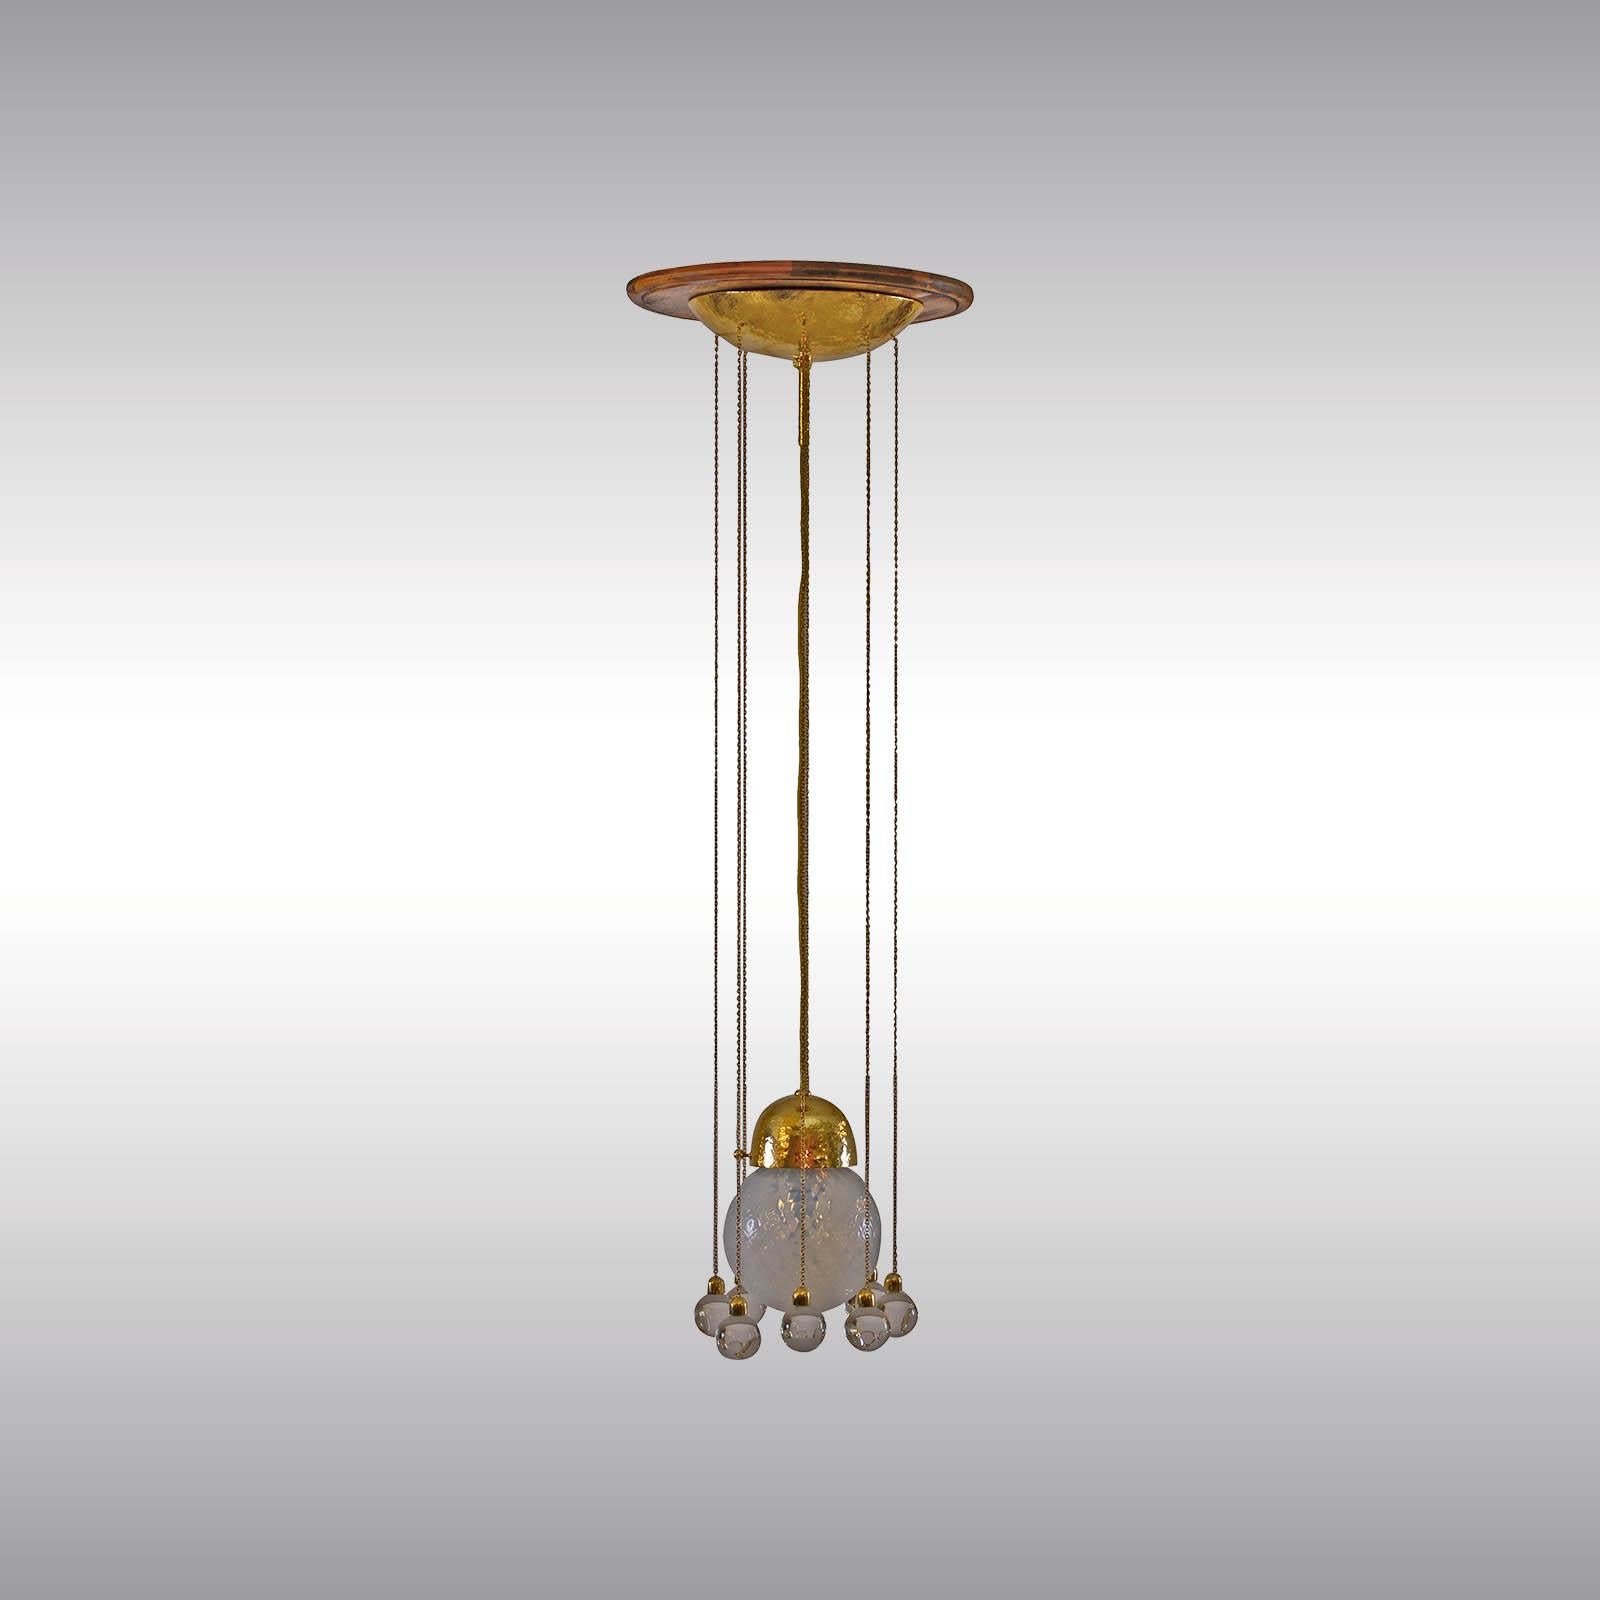 Austrian Josef Hoffmann & Wiener Werkstaette Ceiling Lamp, Re-Edition